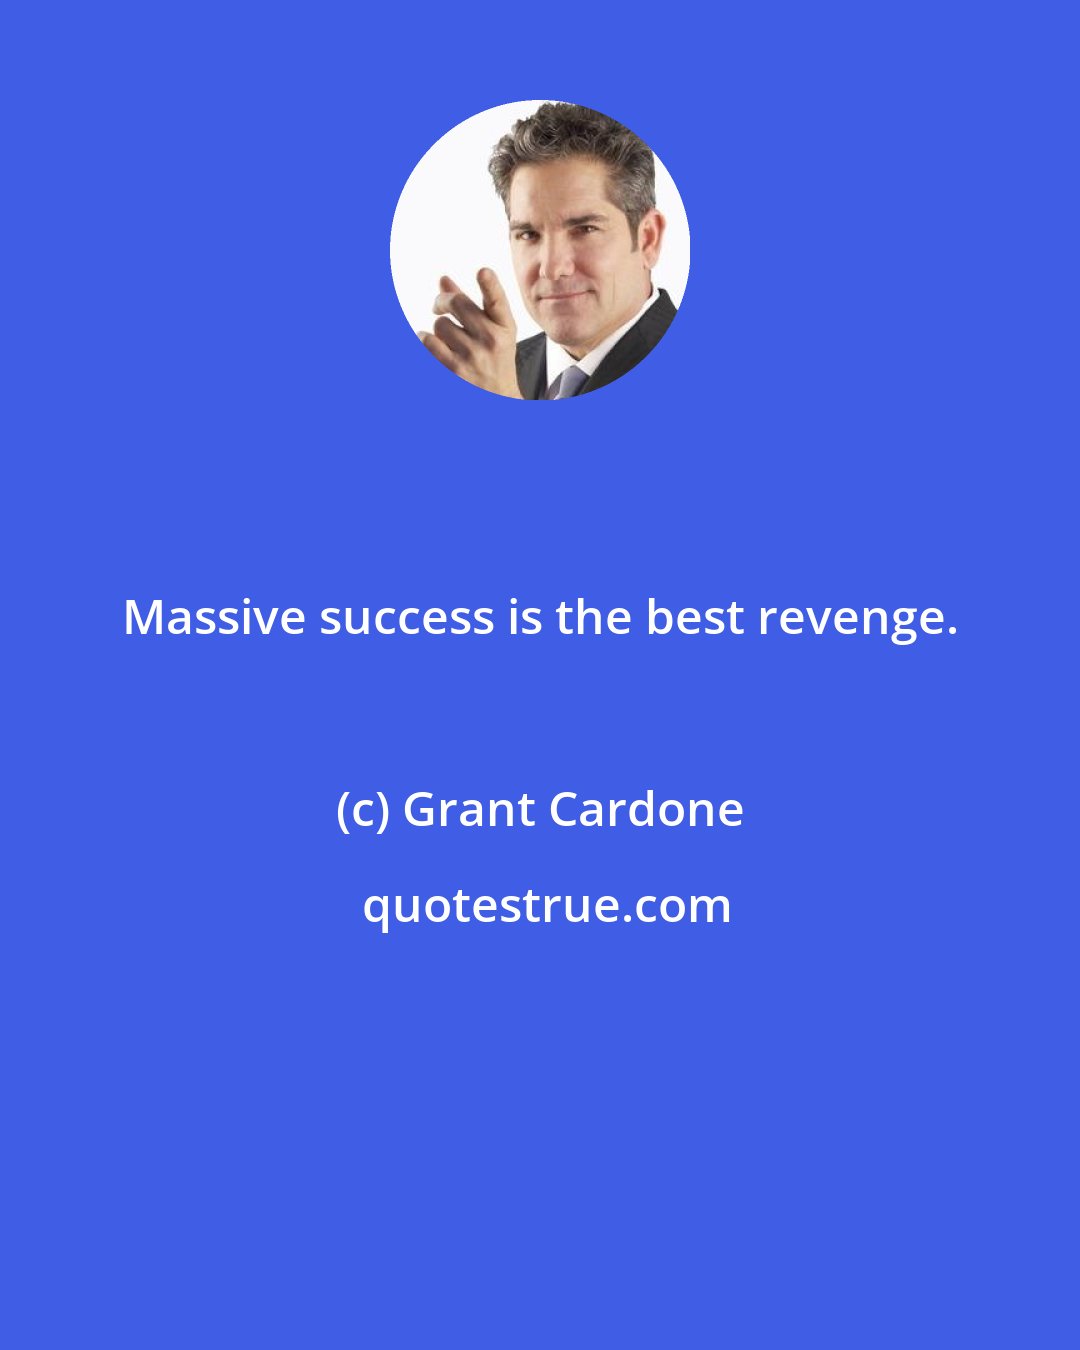 Grant Cardone: Massive success is the best revenge.